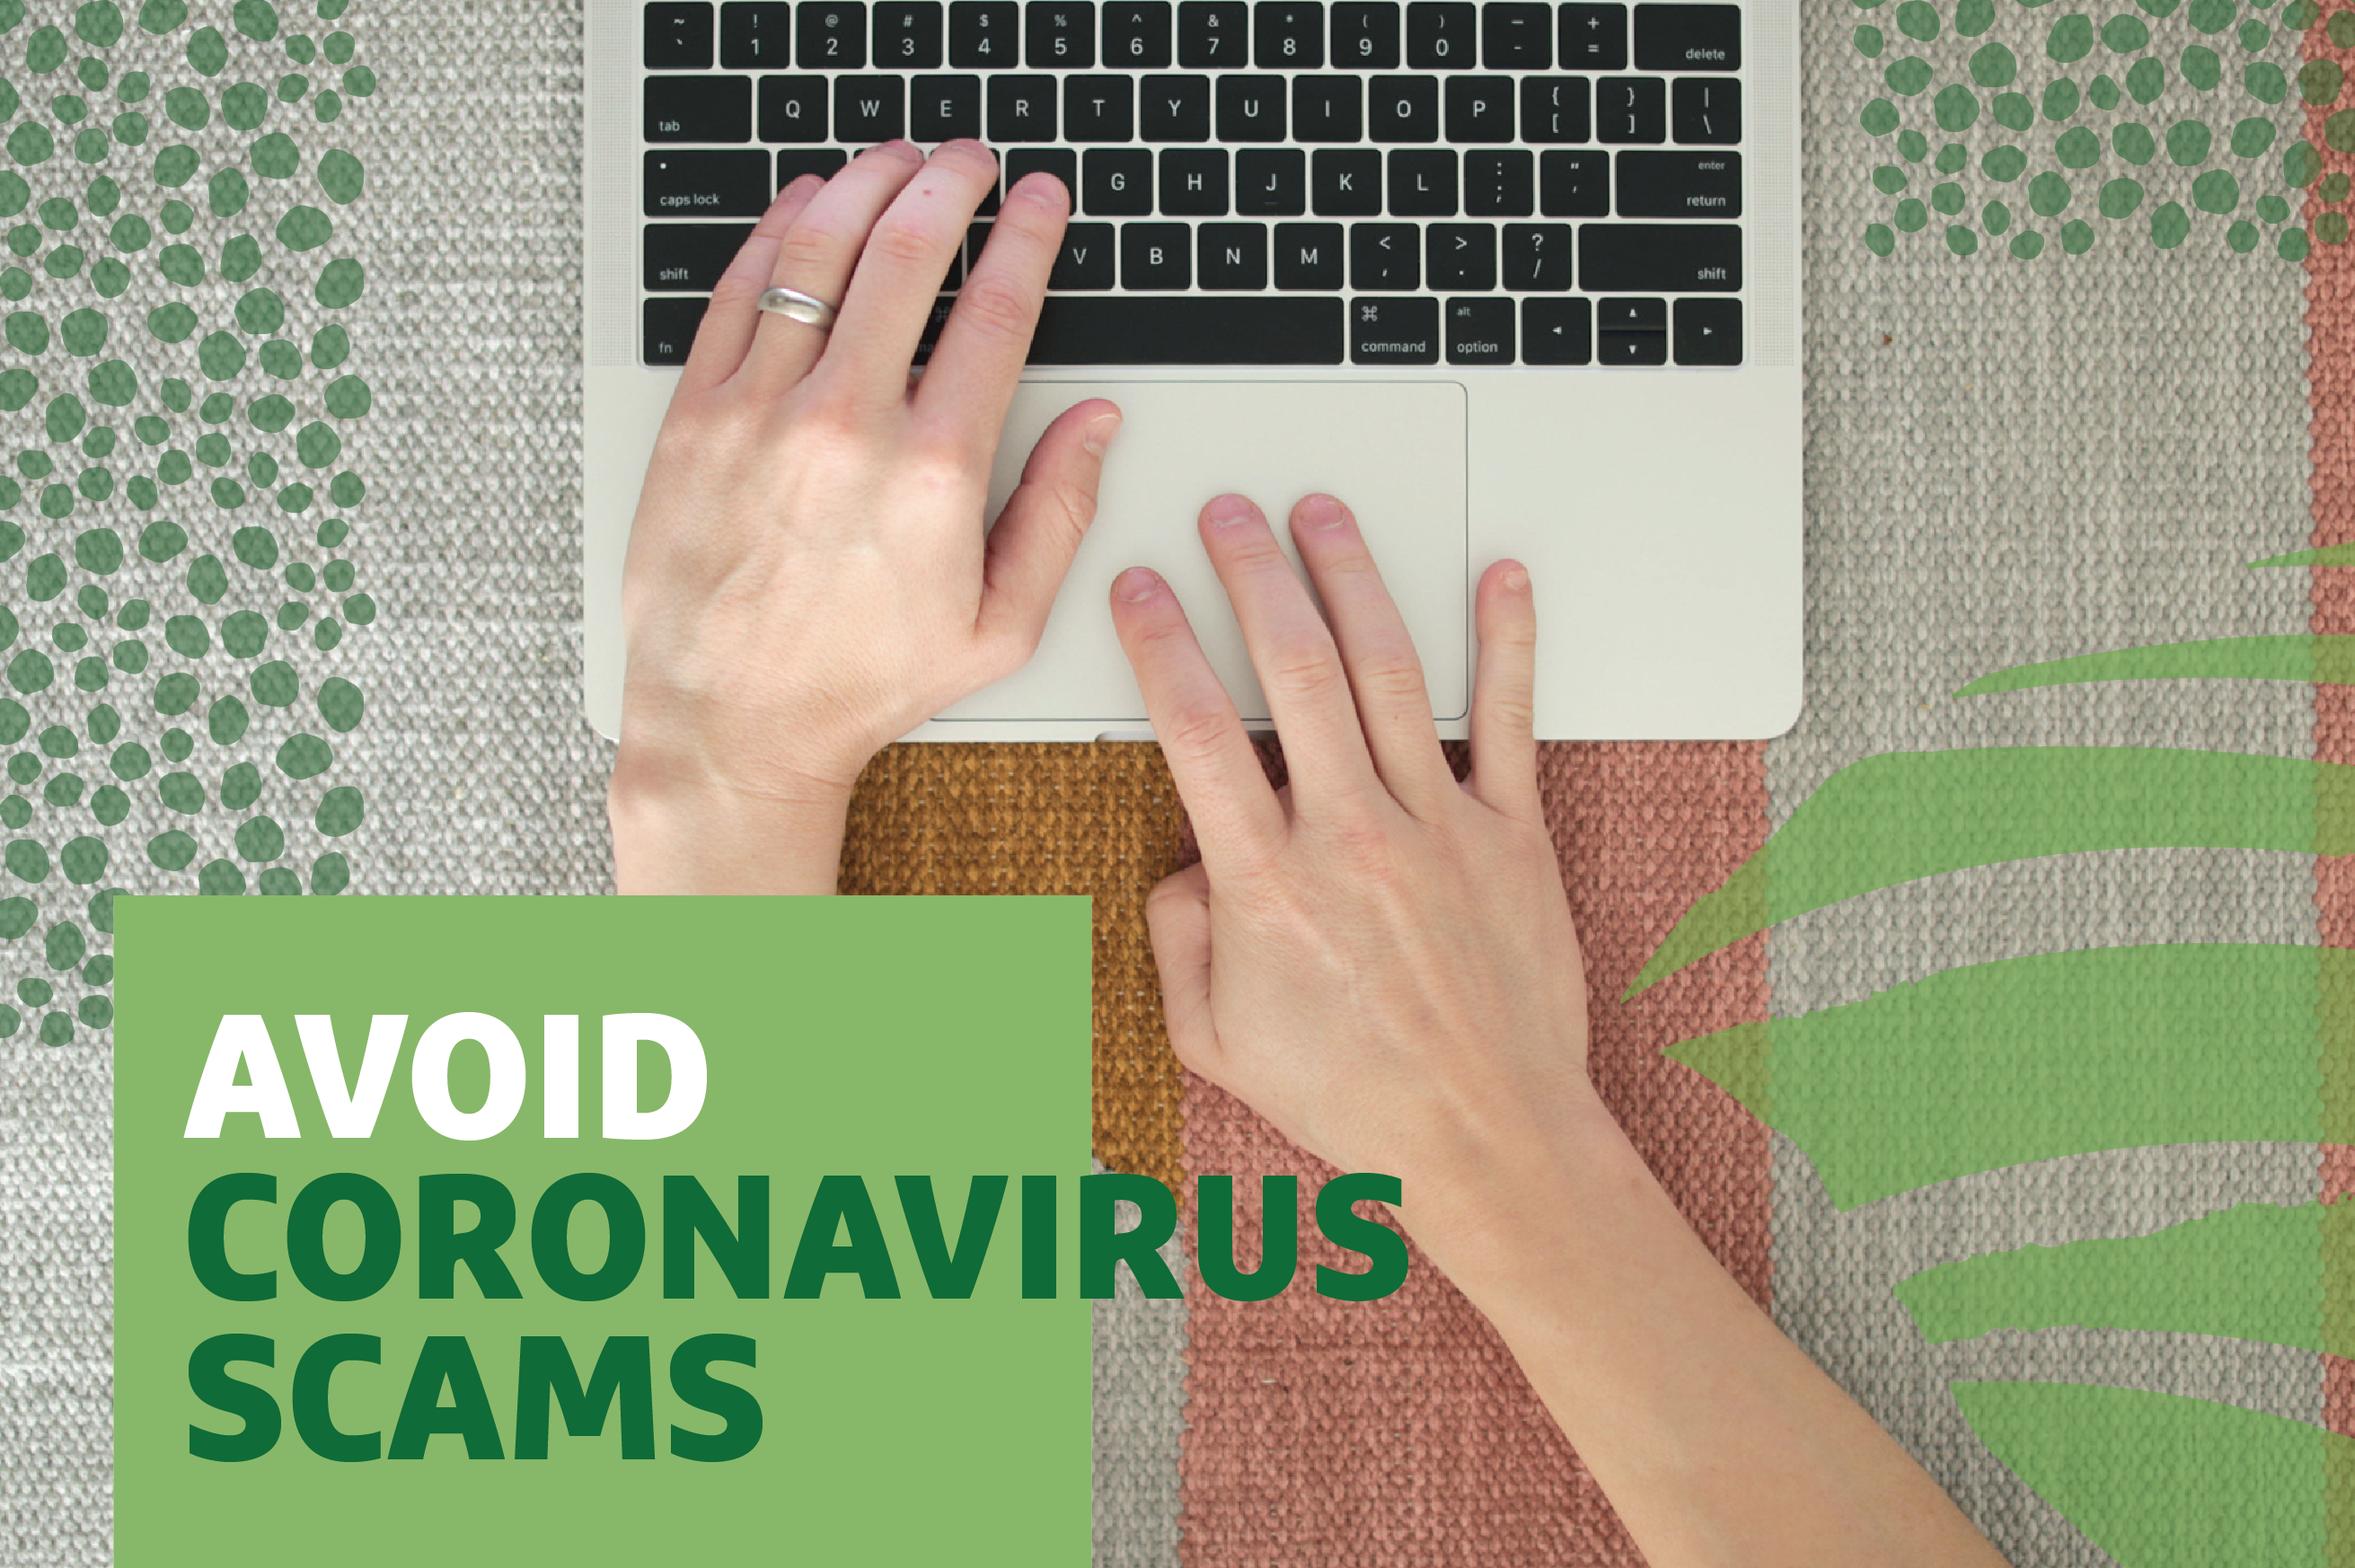 "Avoid Coronavirus Scams" text on overhead photo of person working on a laptop